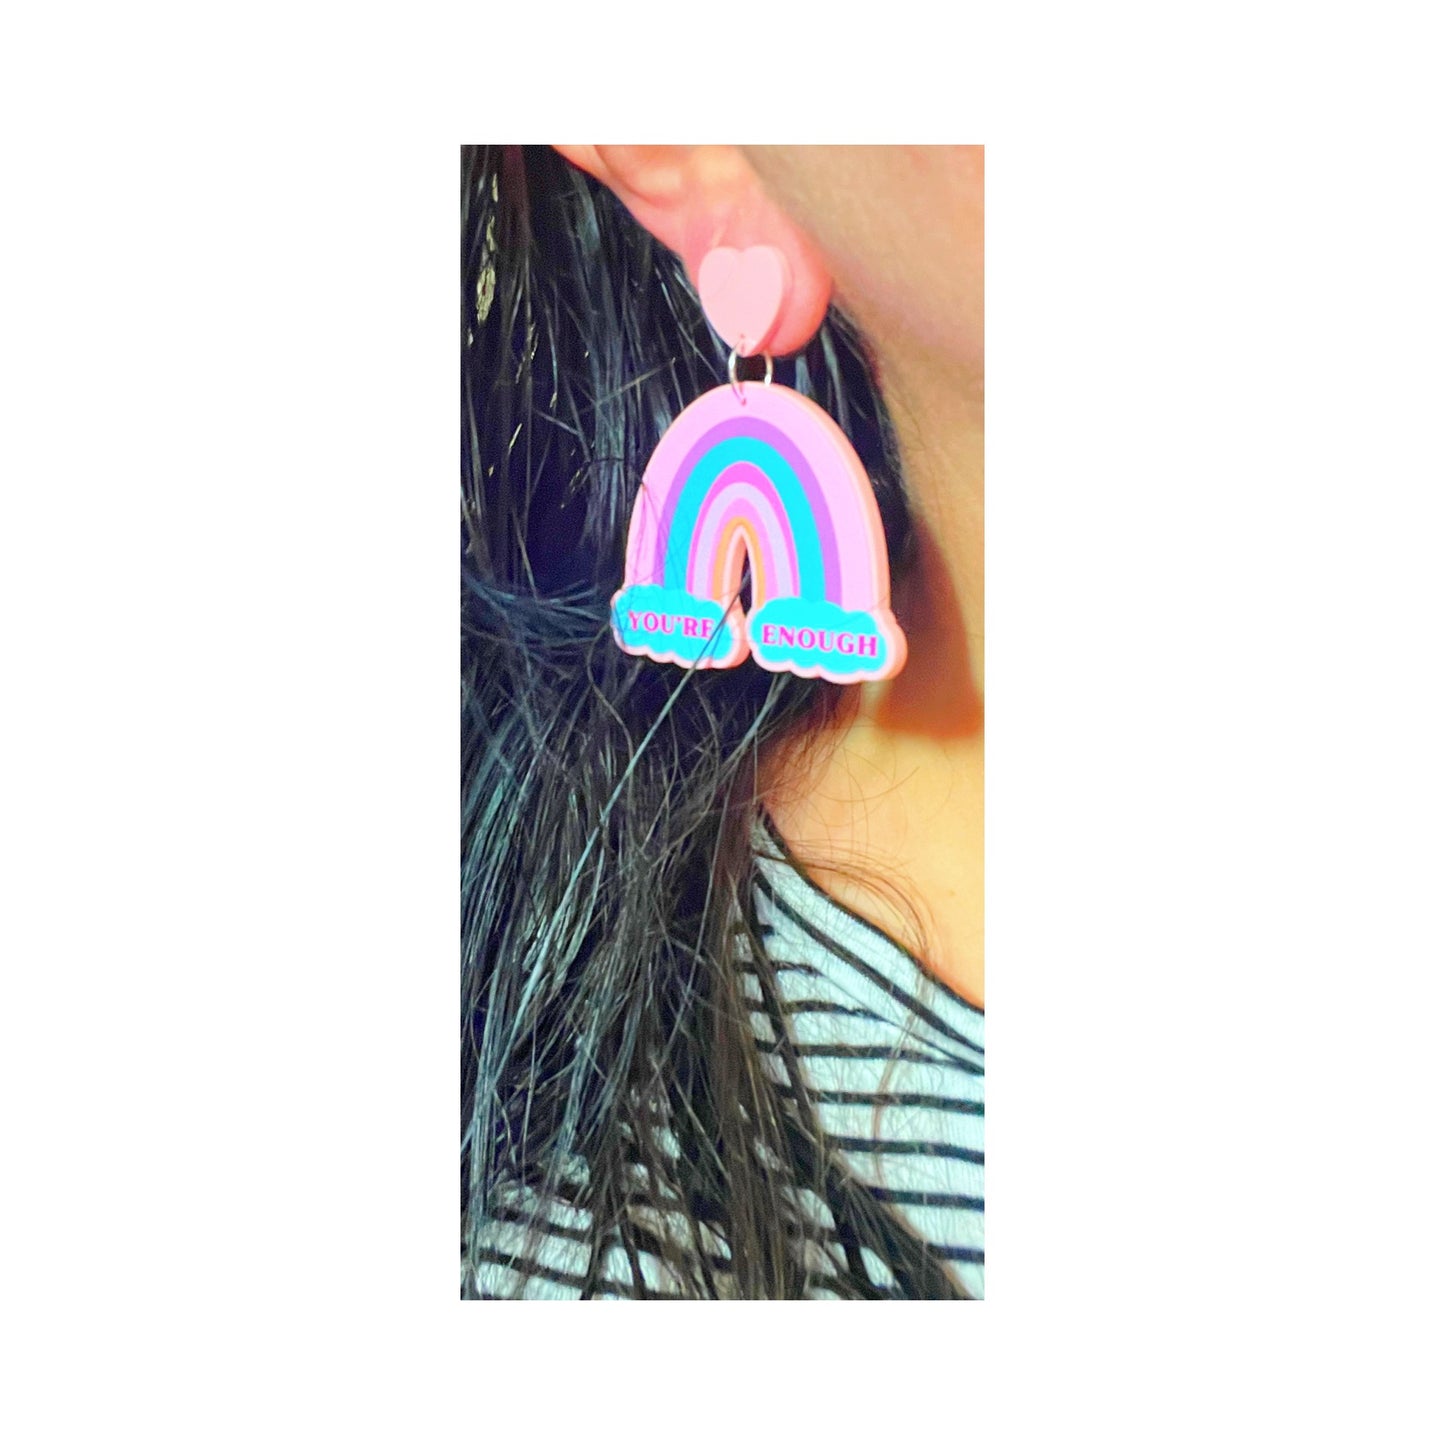 You’re Enough Rainbow Acrylic Drop Earrings